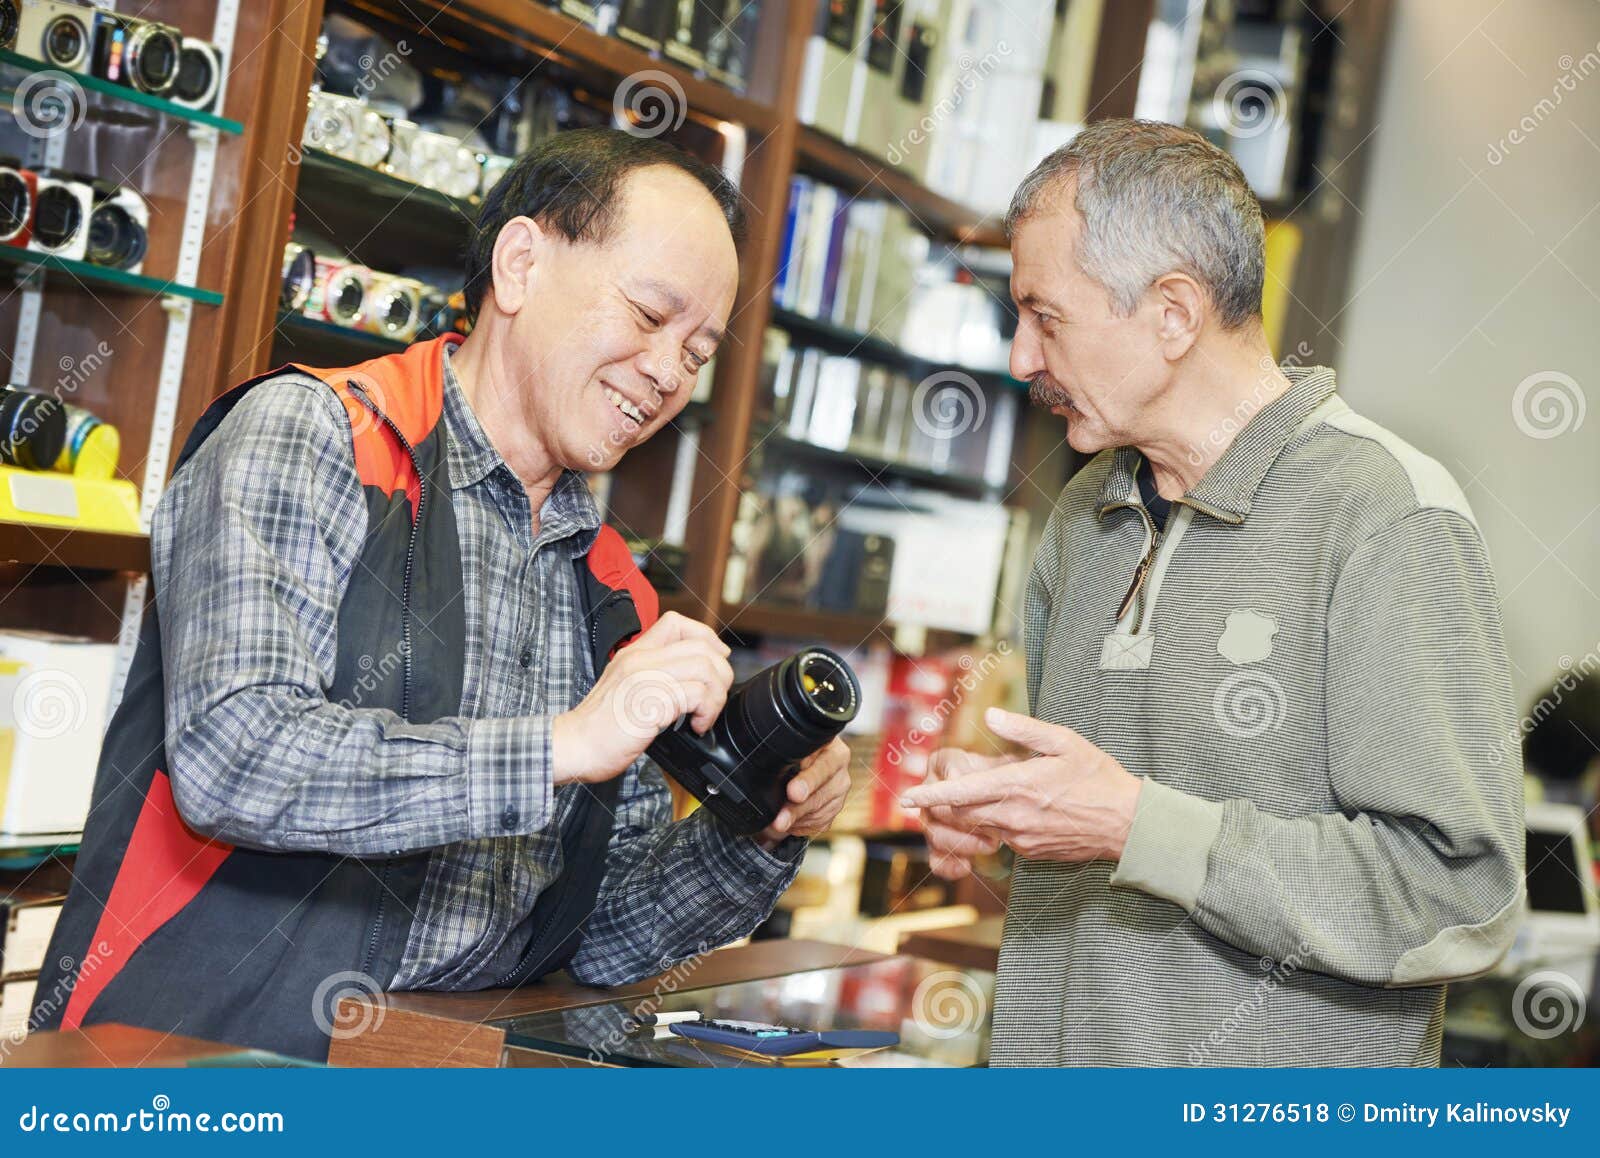 seller demonstrating photo camera to buyer